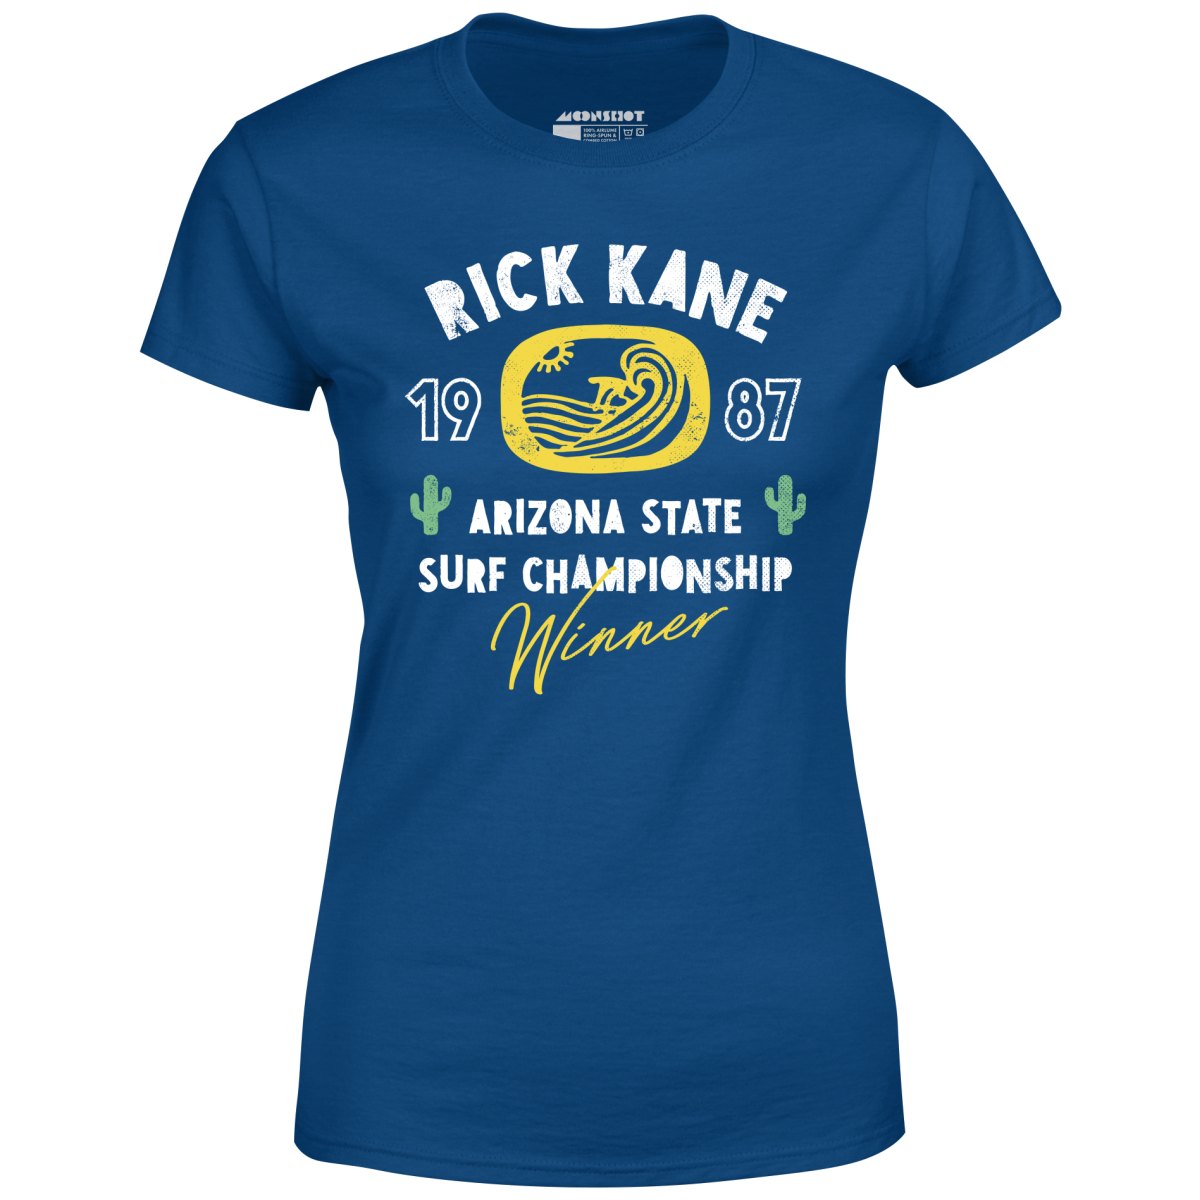 Rick Kane - Arizona State Surf Championship - Women's T-Shirt